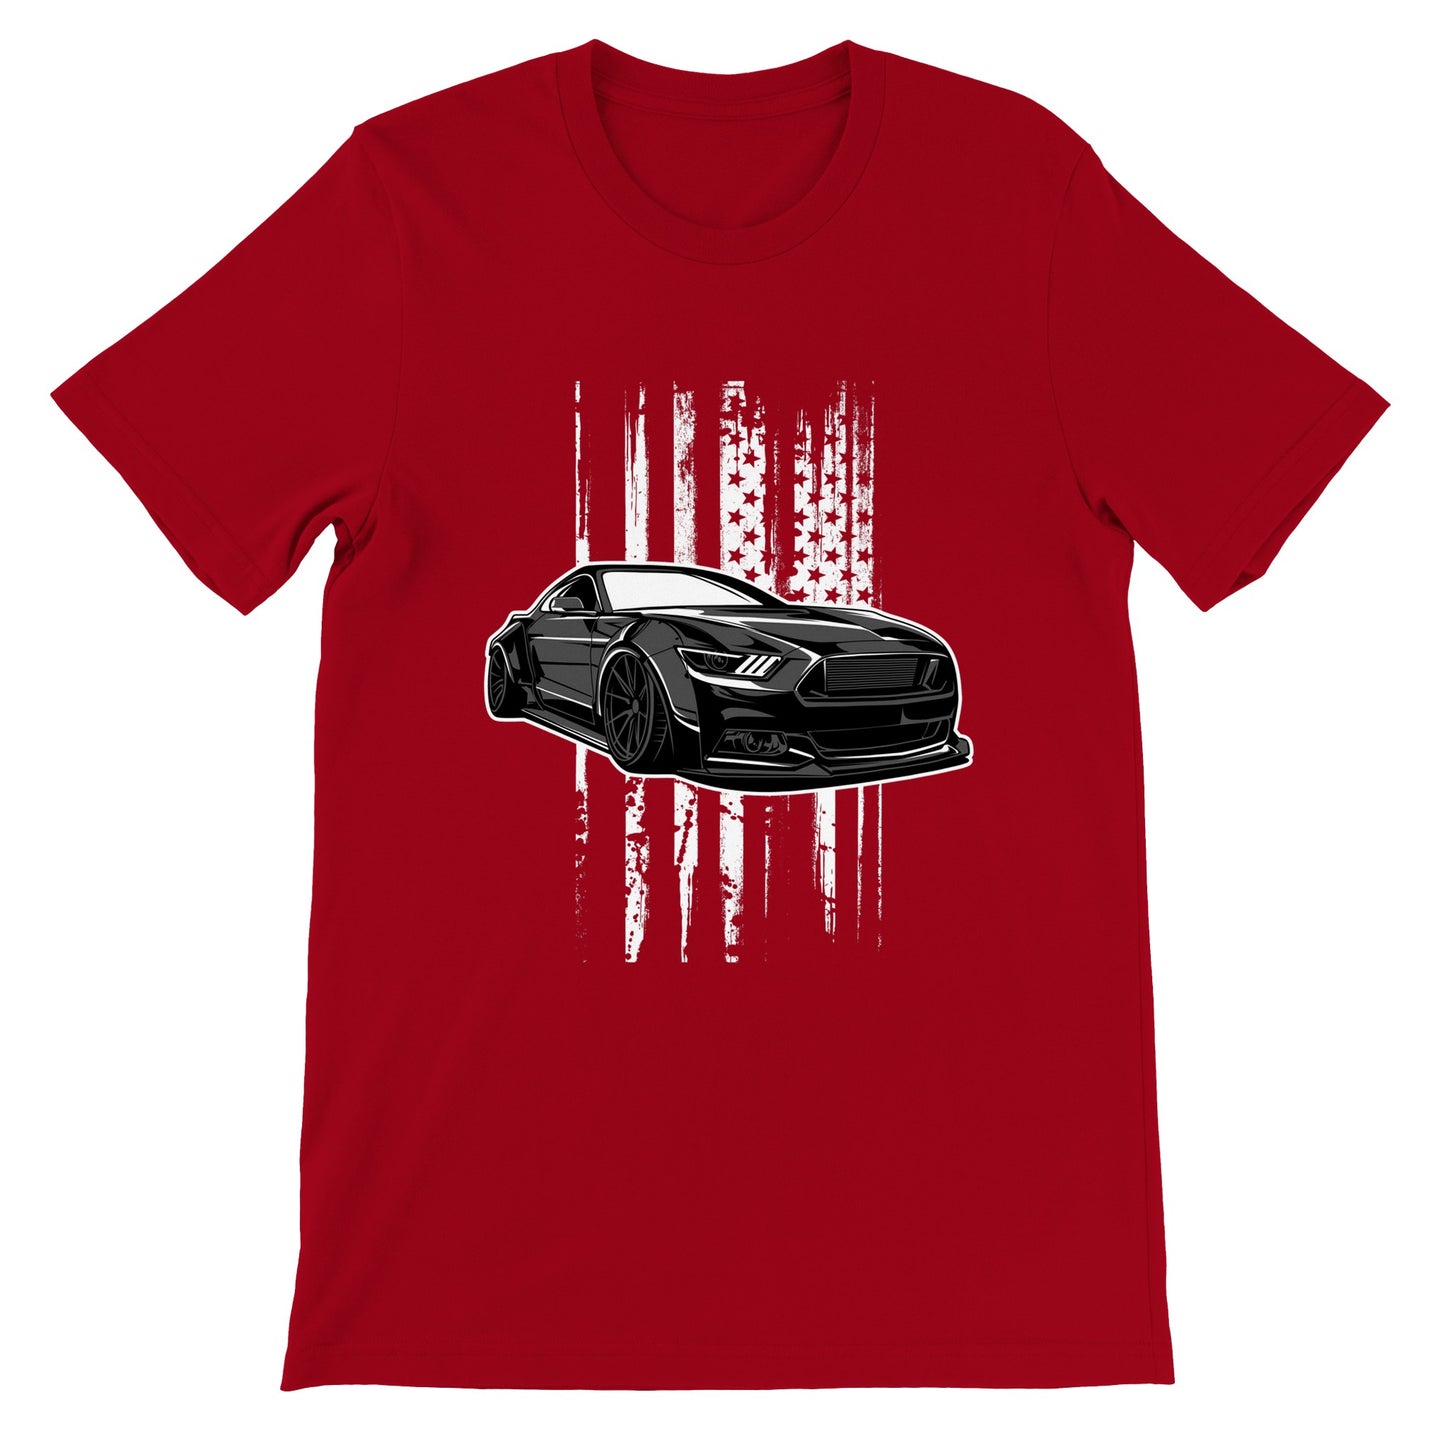 Car T-shirt - The Legendary Mustang - Artwork - Premium Unisex T-shirt